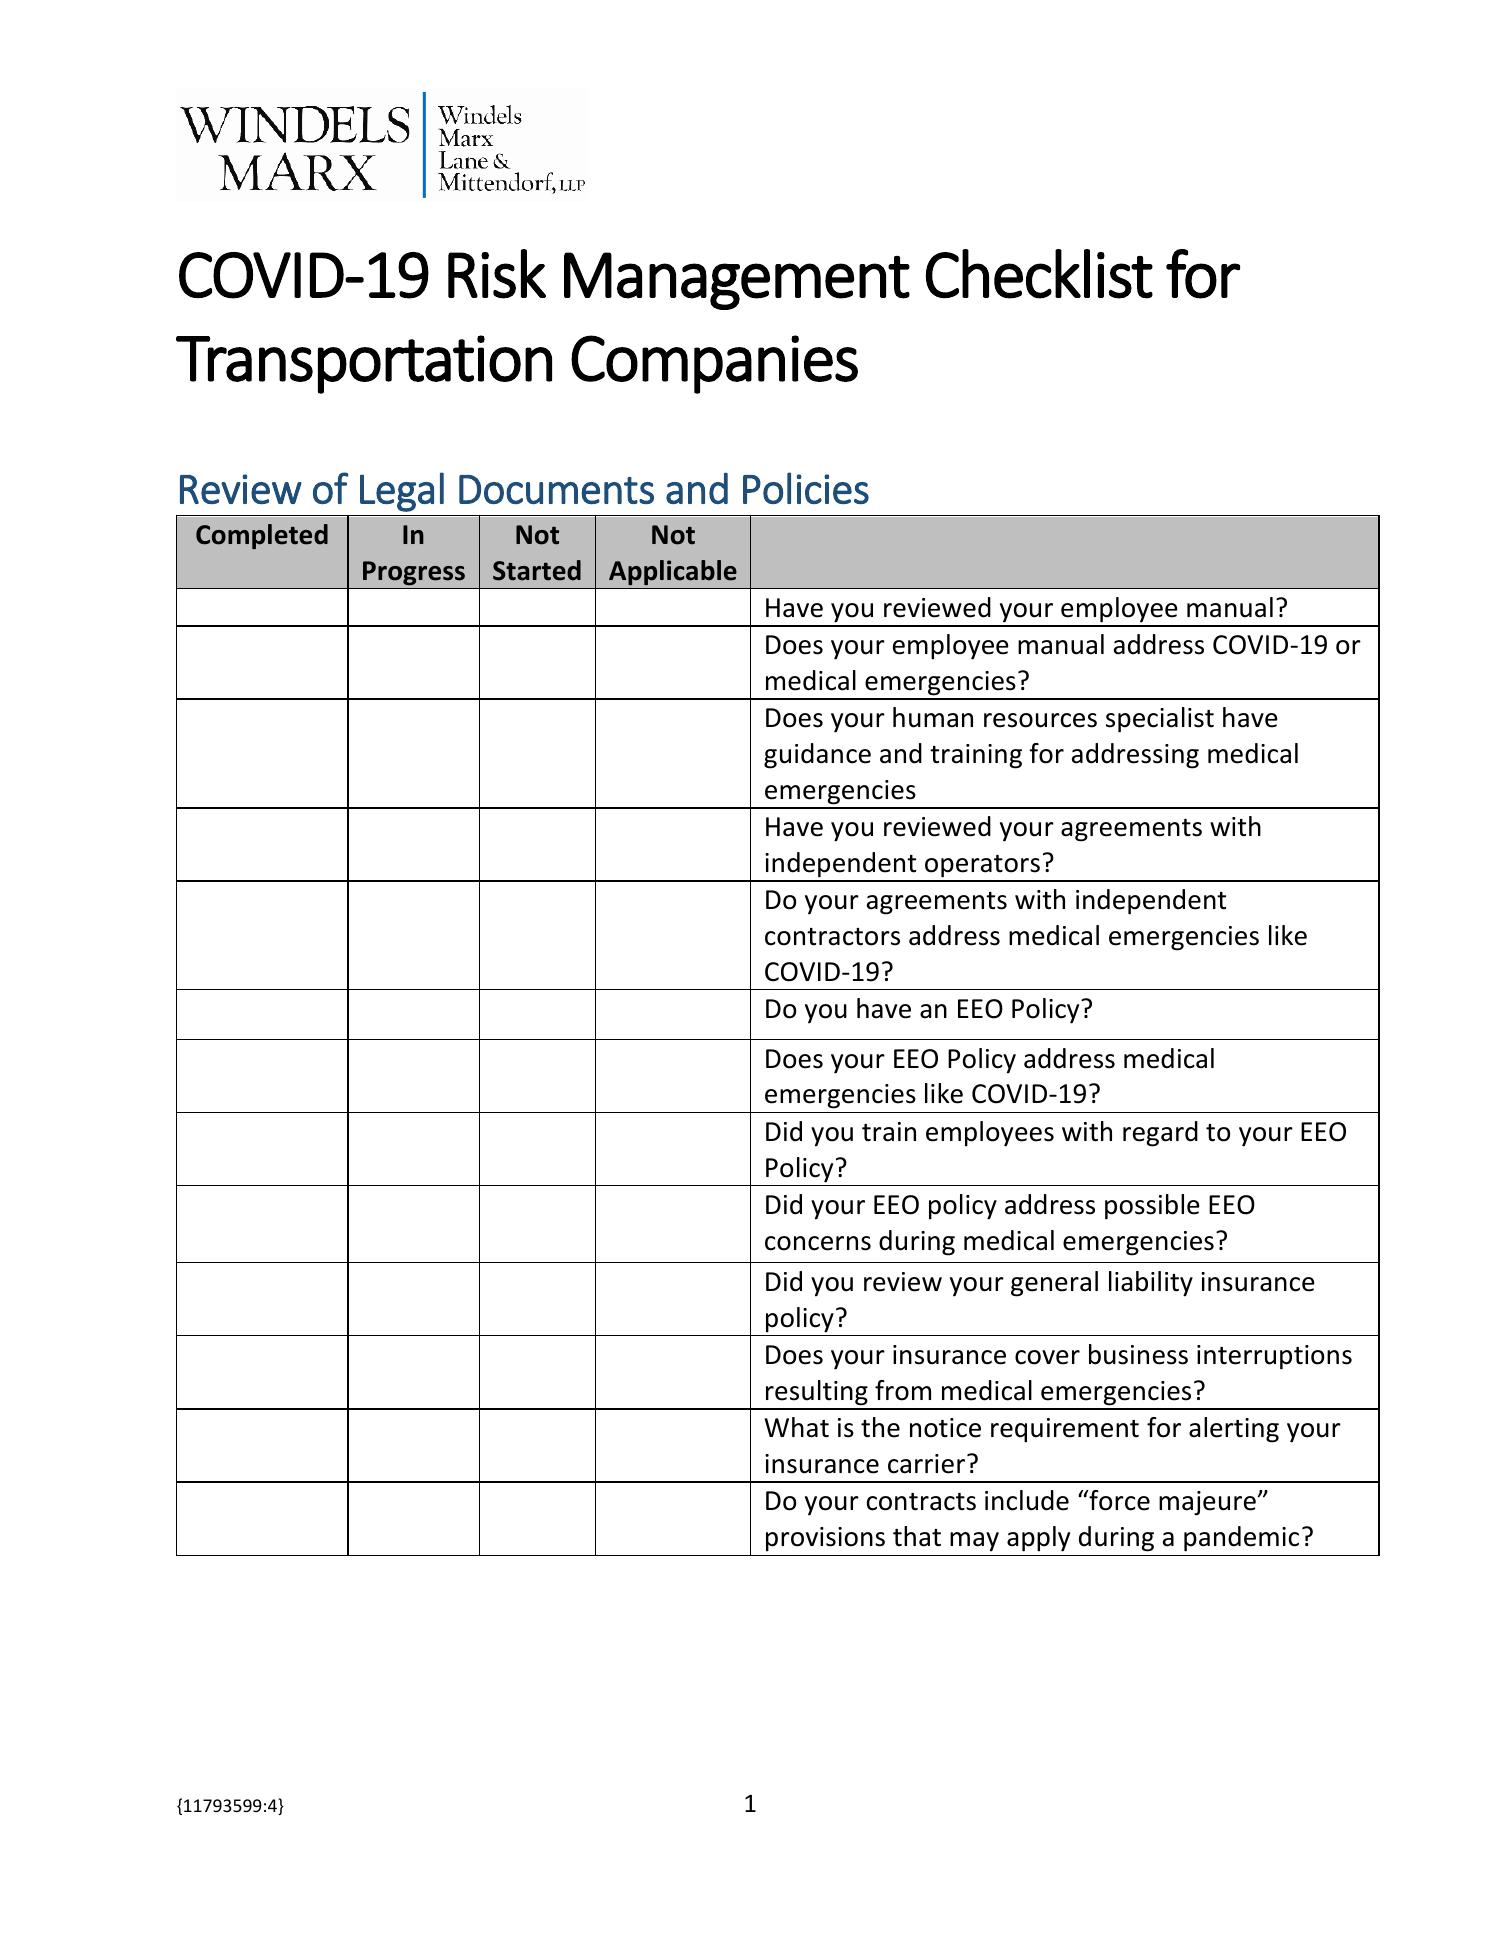 COVID-19 Risk Management Checklist for Transportation ...